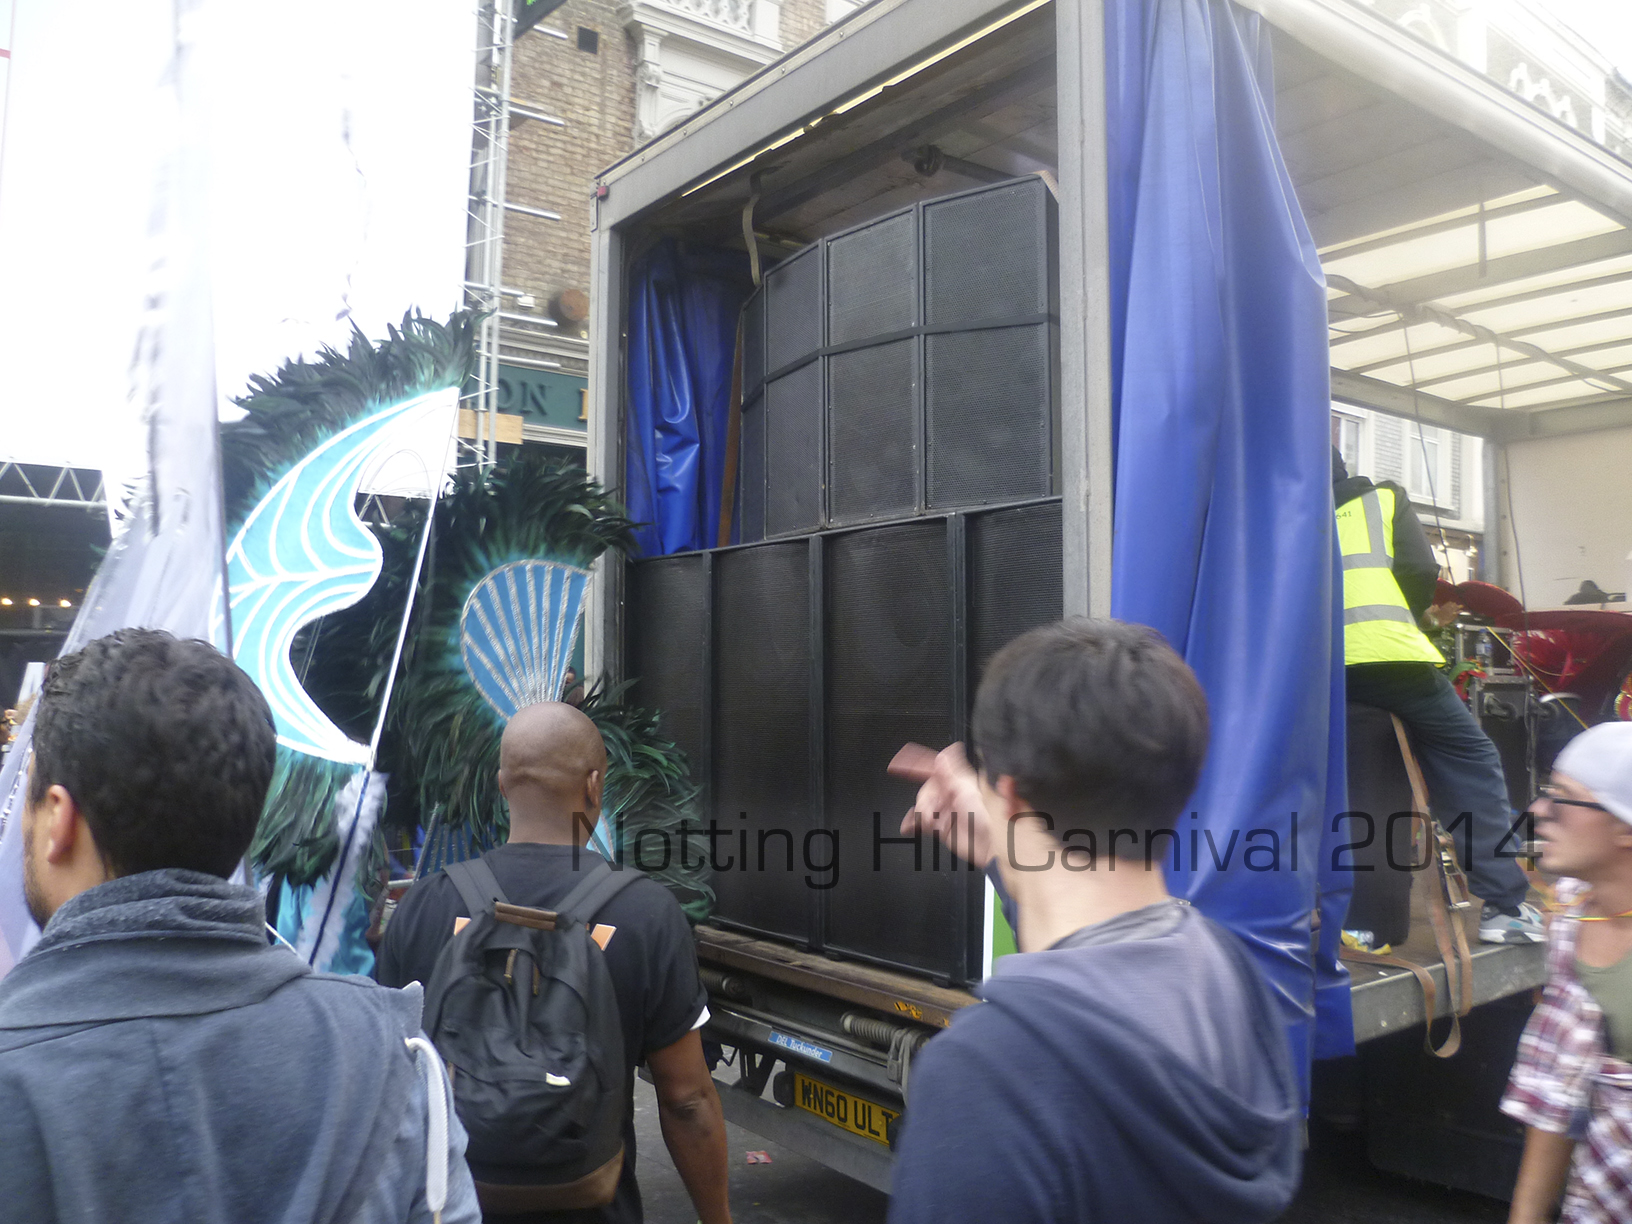 Notting-Hill-Carnival-2014-Float-Sound-System-3